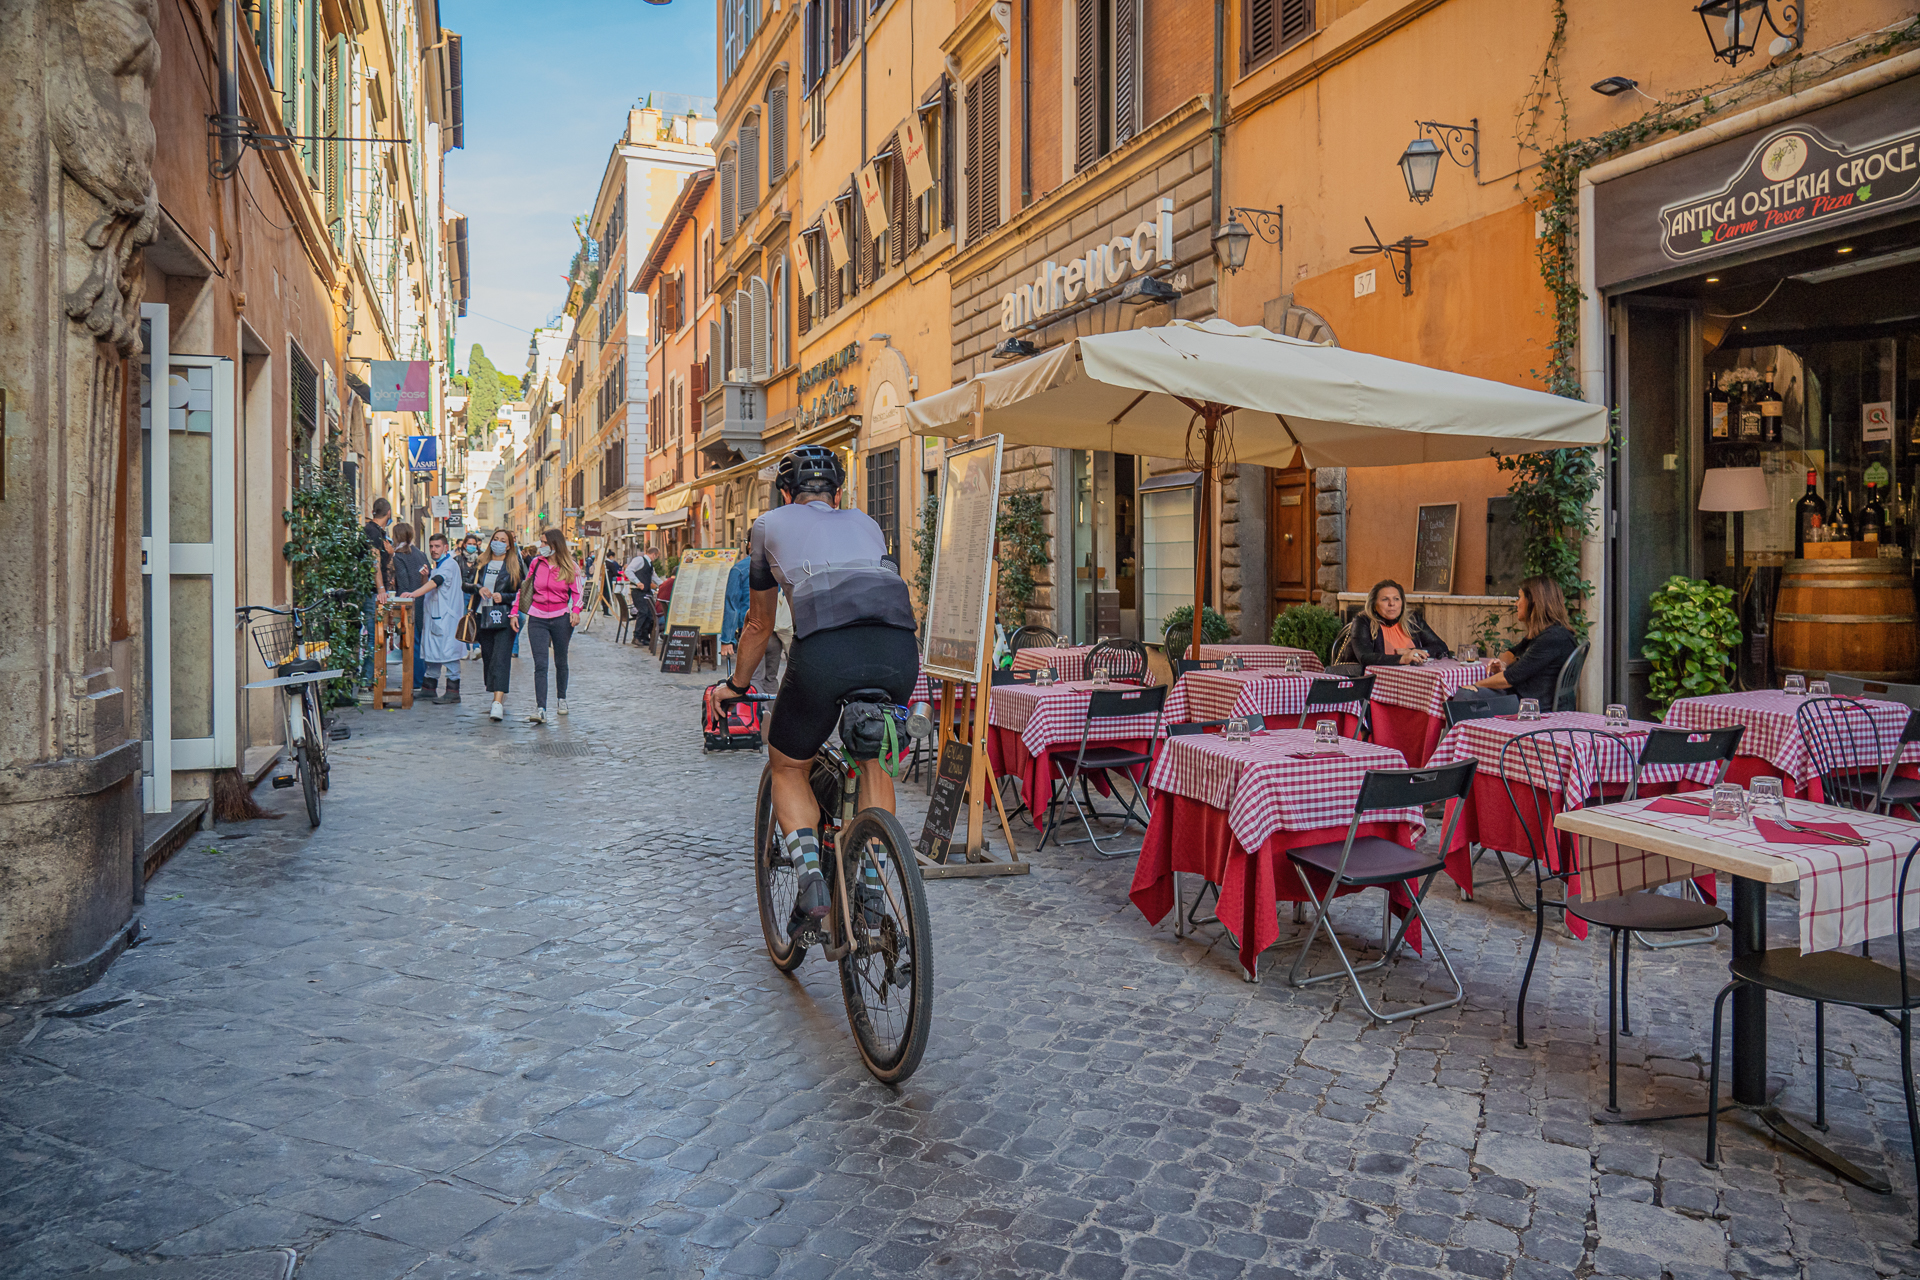 Cycling through central Rome